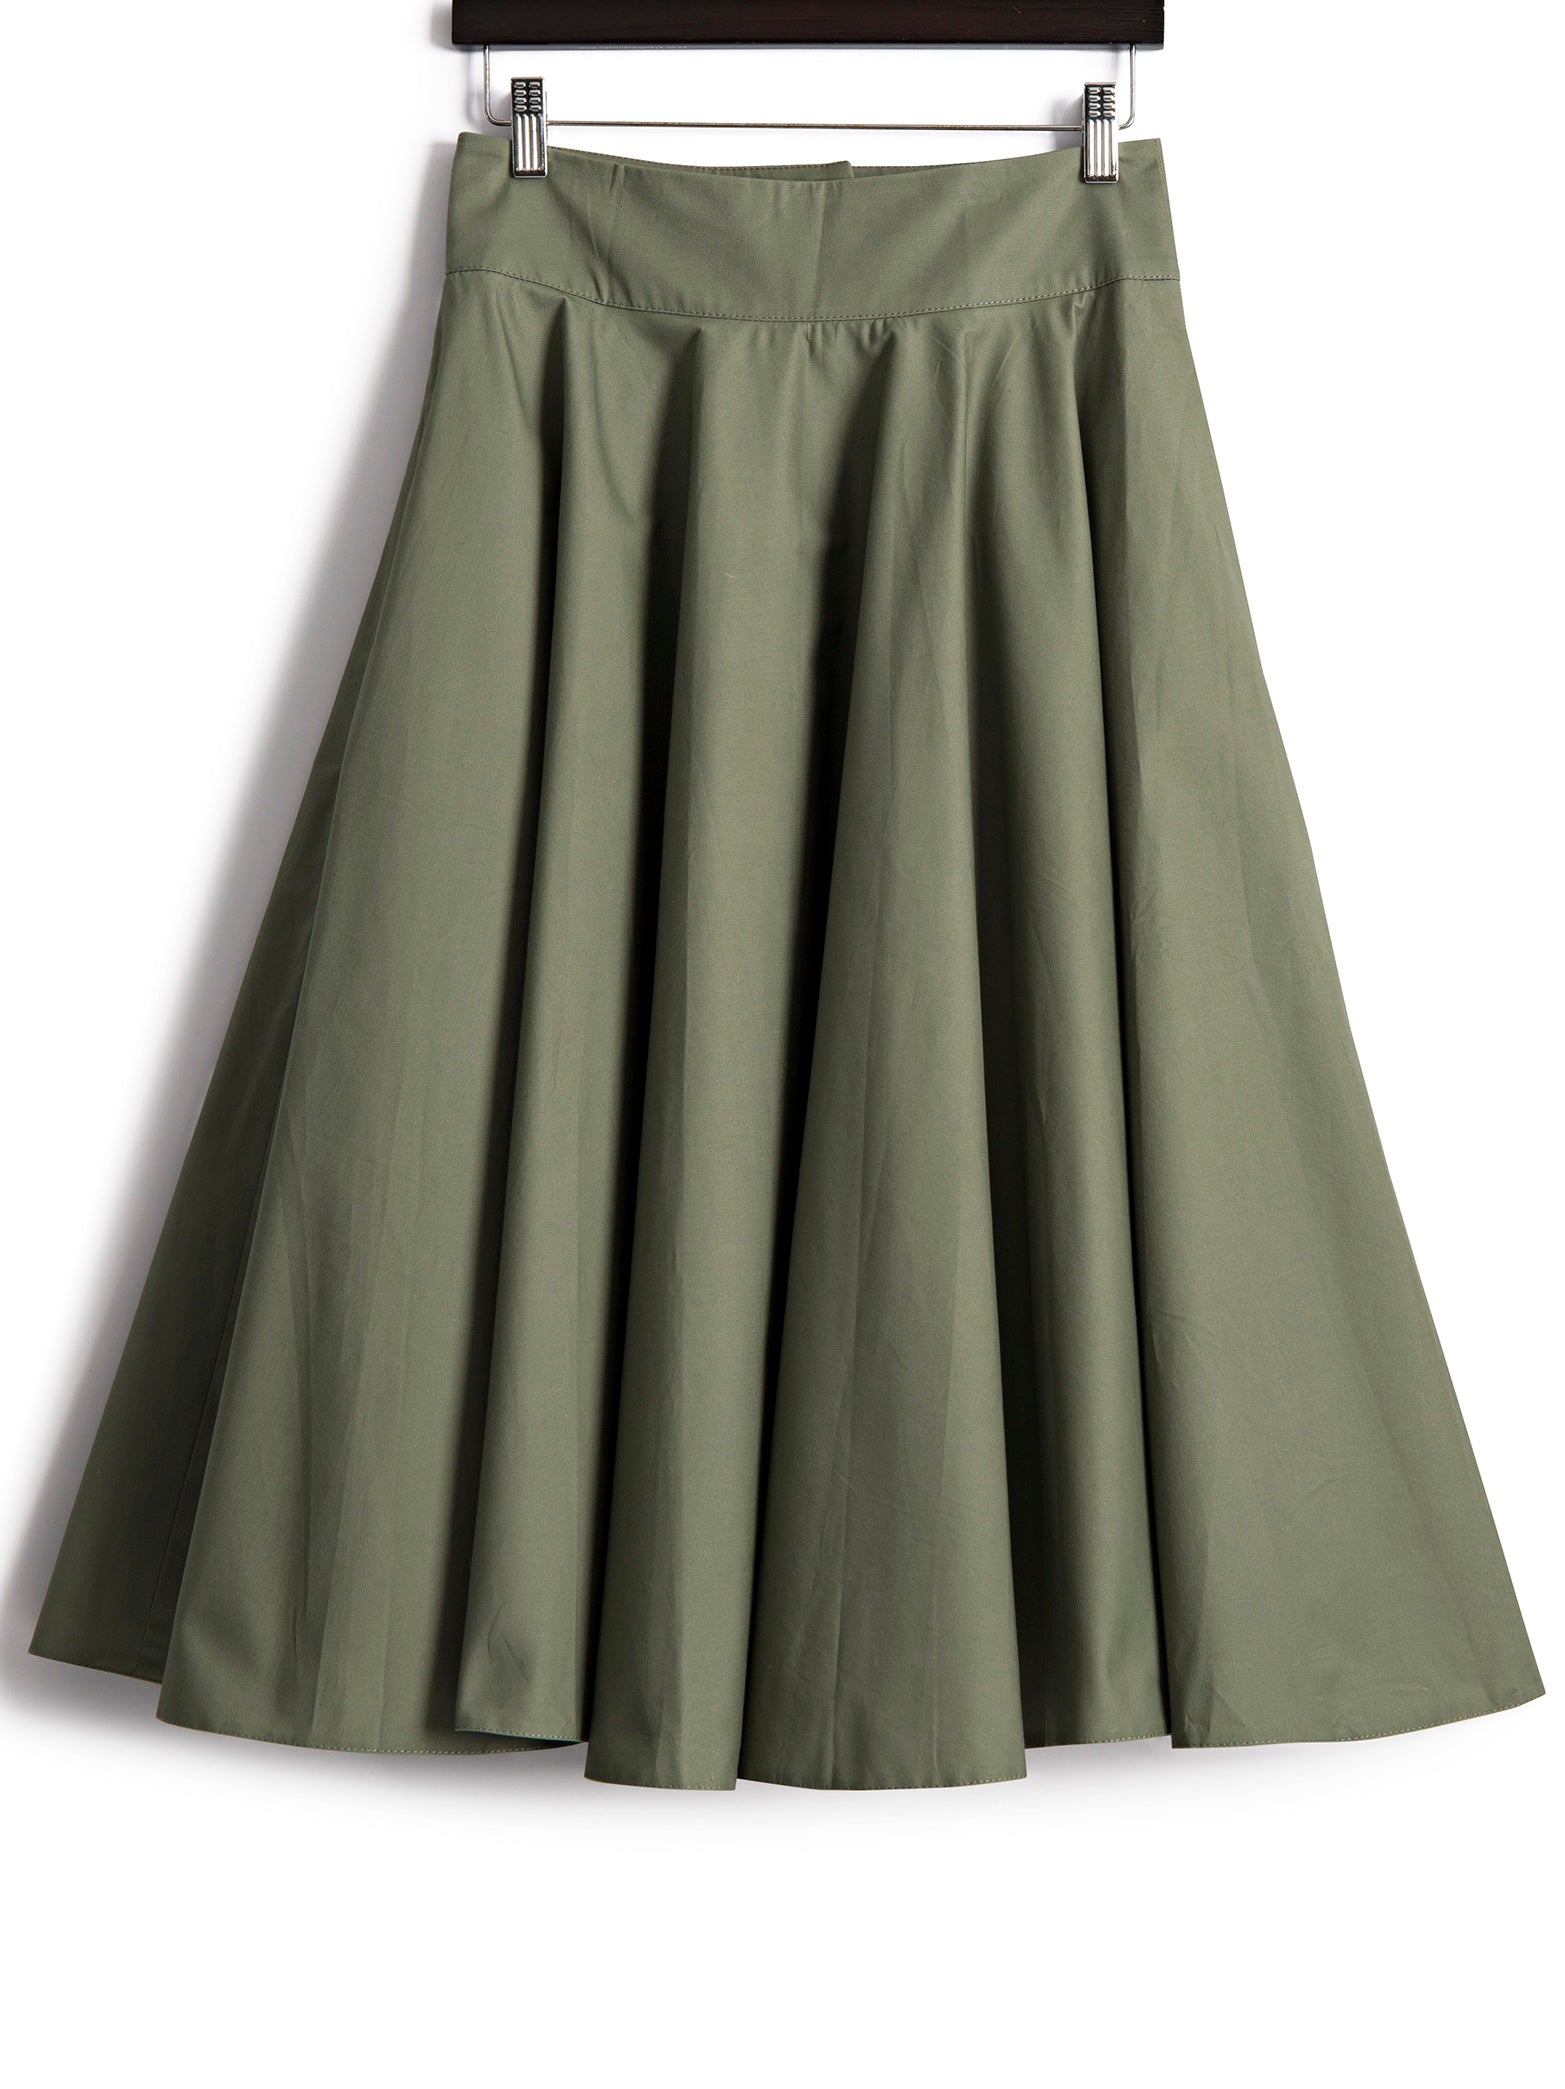 Full Circle Skirt, Dress, Hickman & Bousfied - Hickman & Bousfield, Safari and Travel Clothing